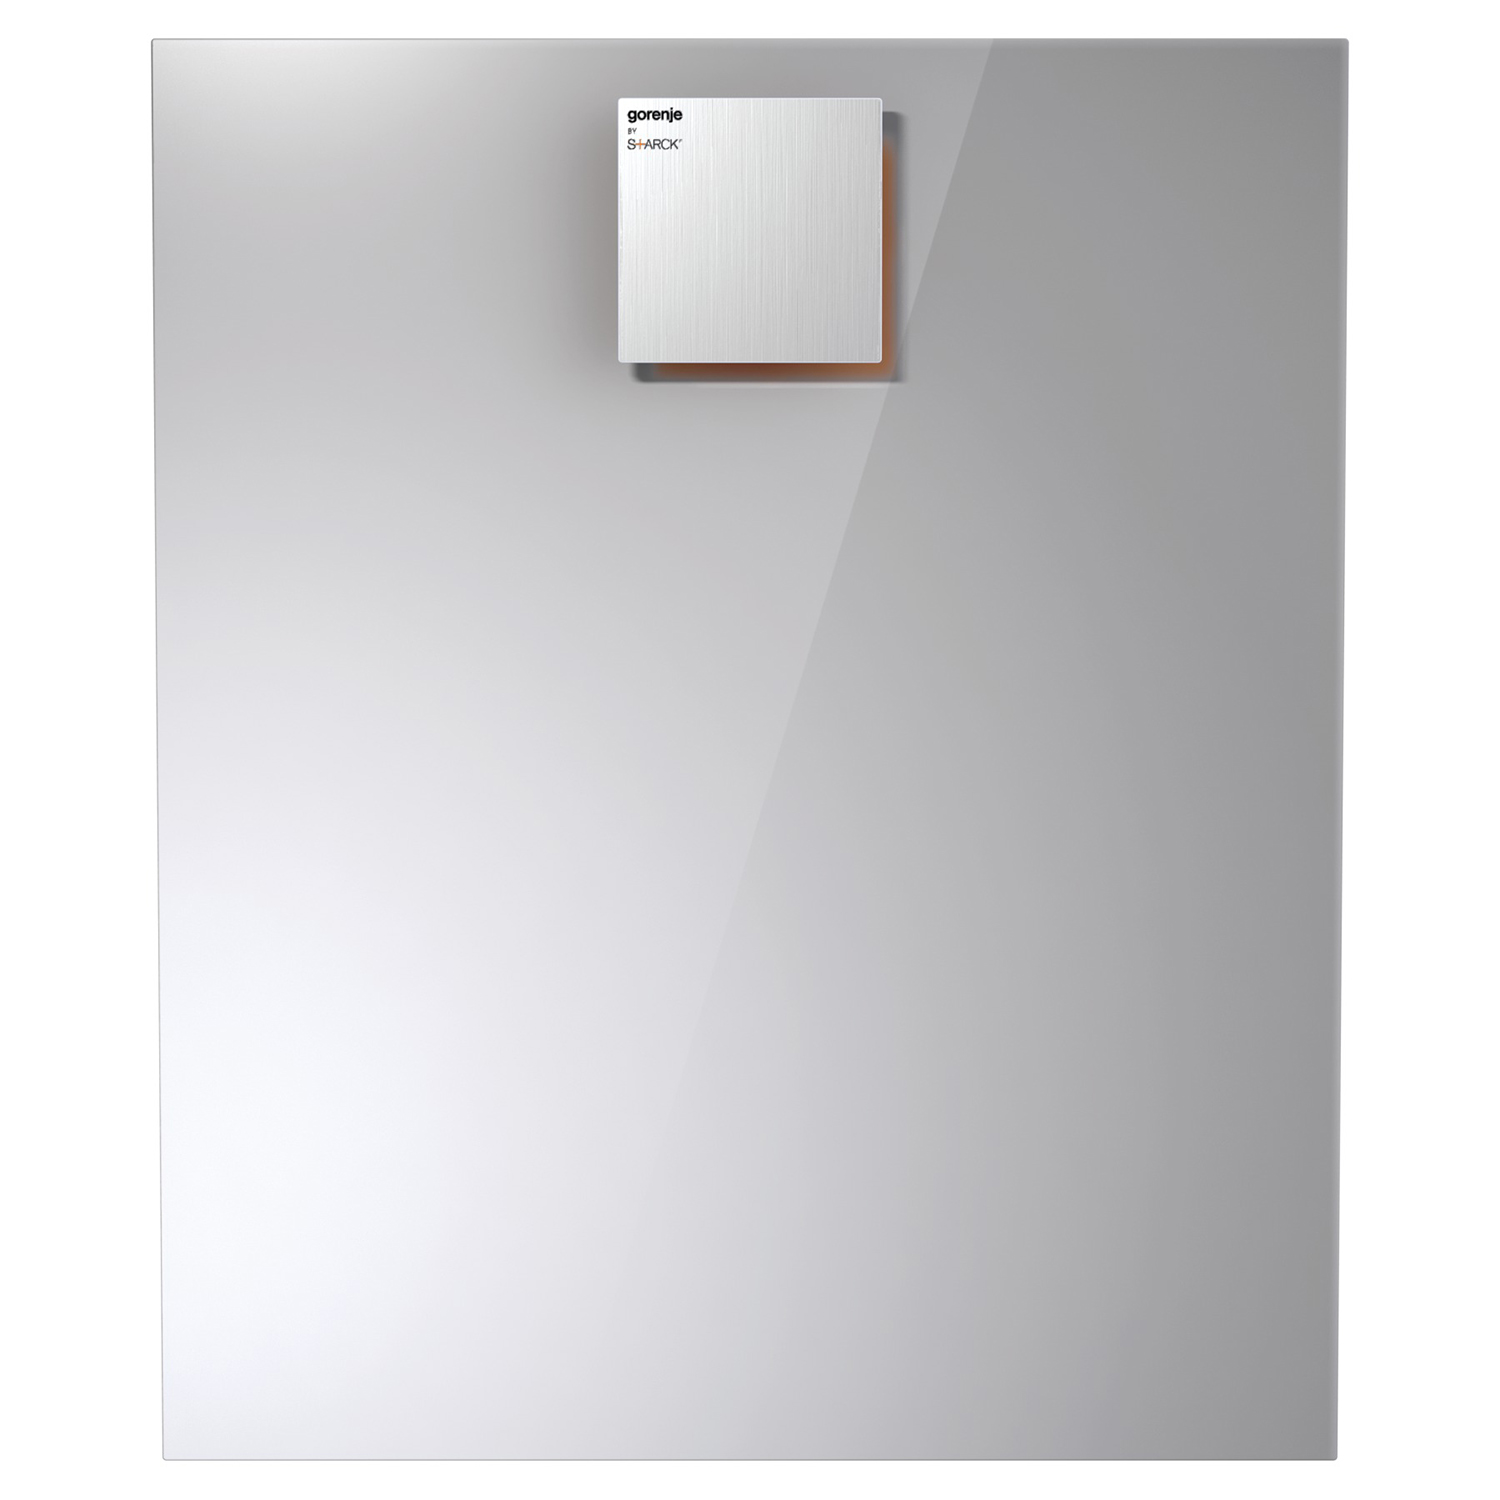 DFD72ST - Elba Dishwasher door, 60 cm DFD72ST